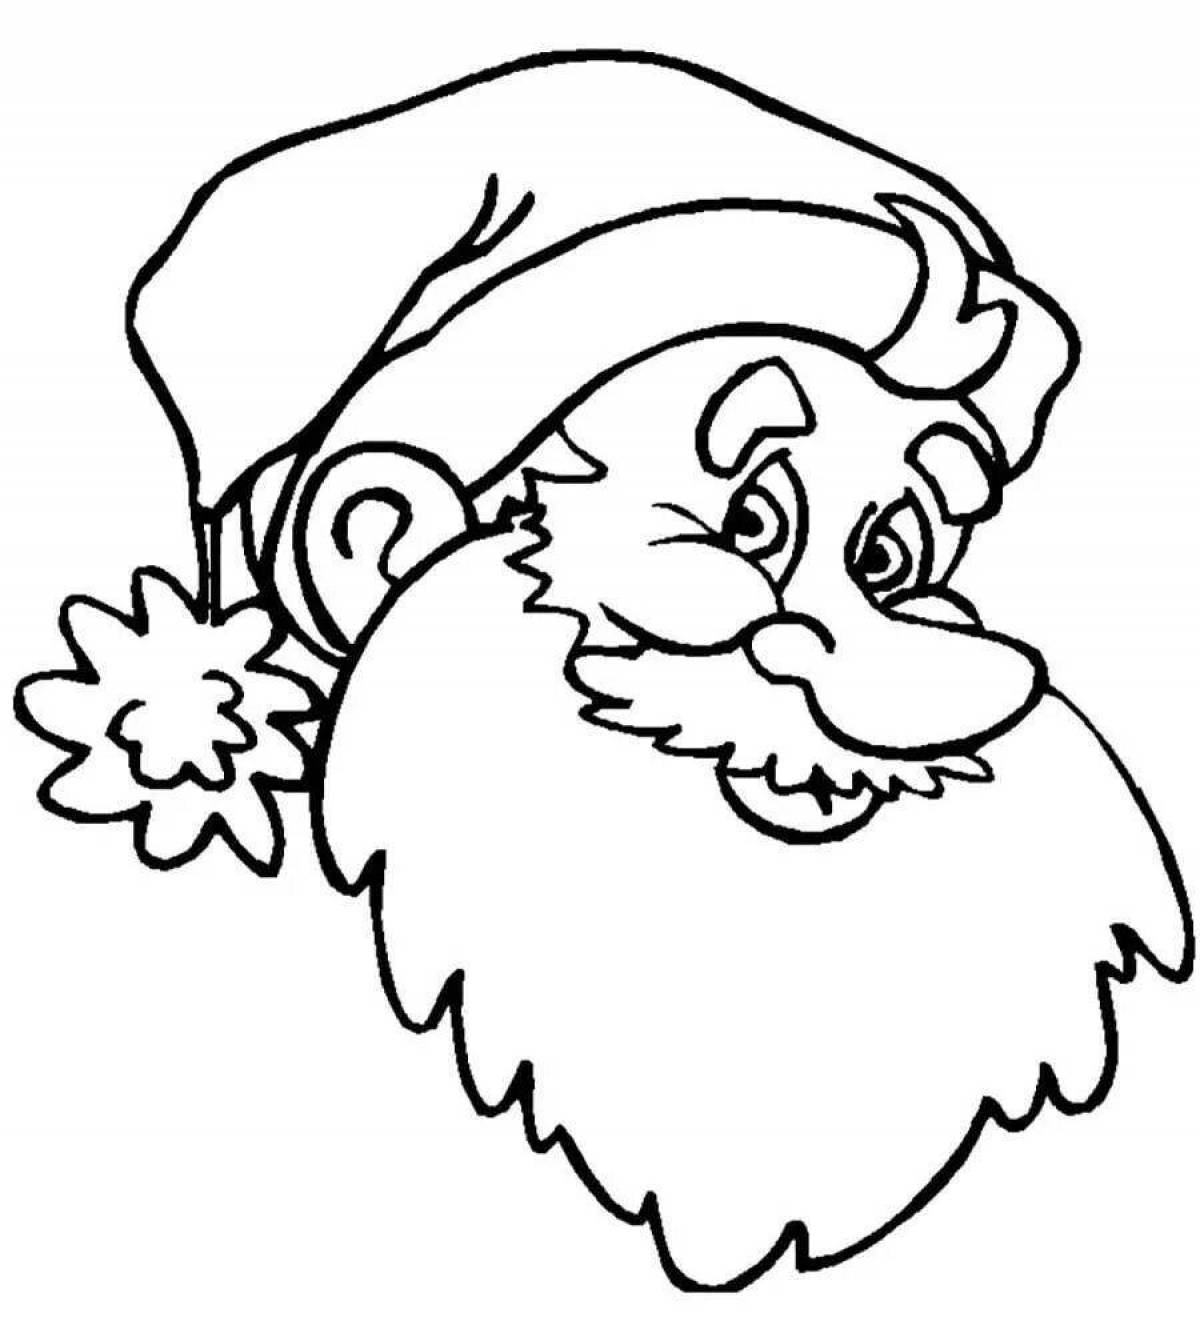 Animated santa head coloring page